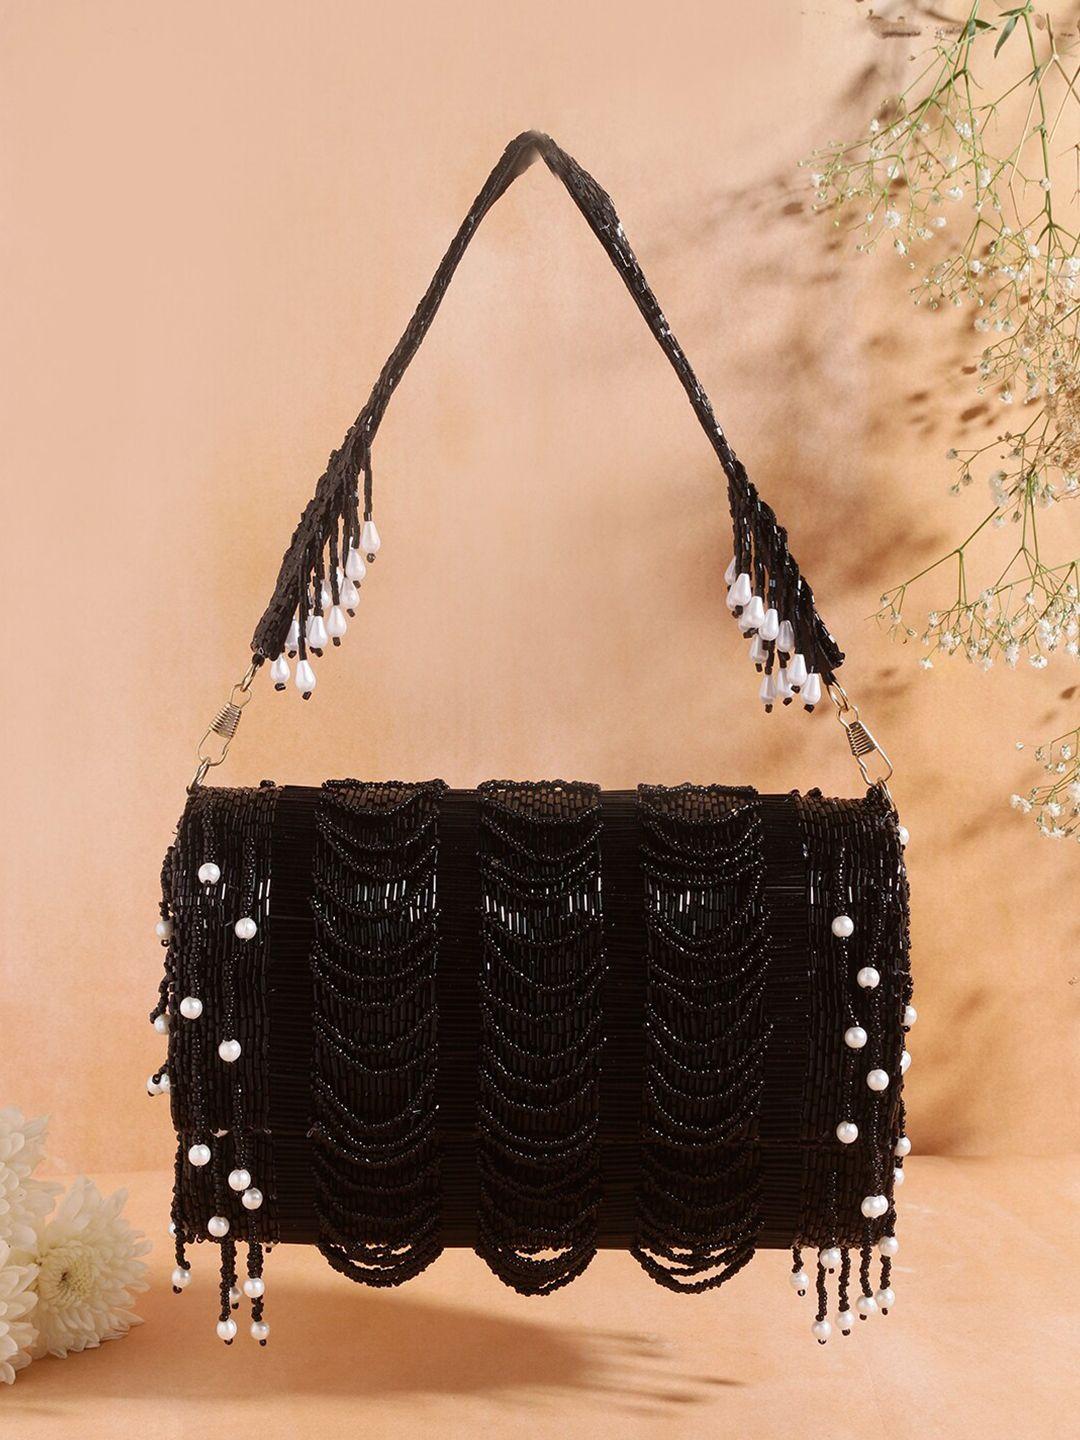 swisni black & white embellished embellished purse clutch